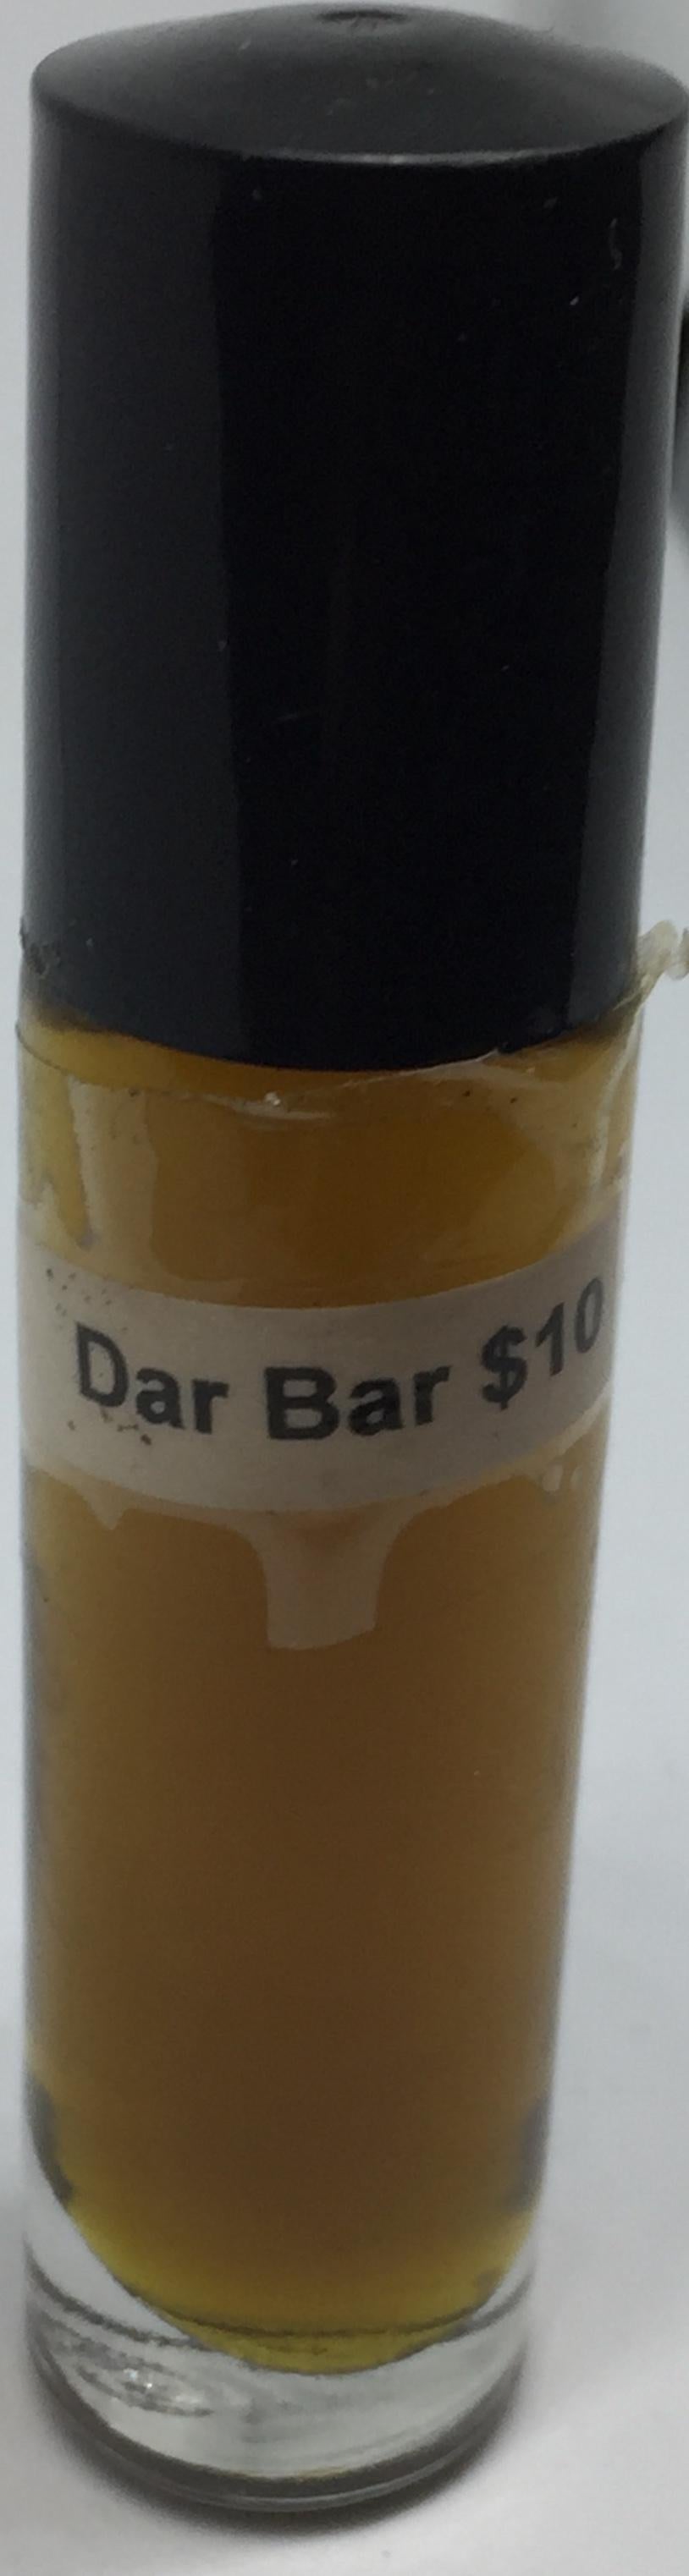 Dar Bar: Fragrance(Perfume)Body Oil Unisex